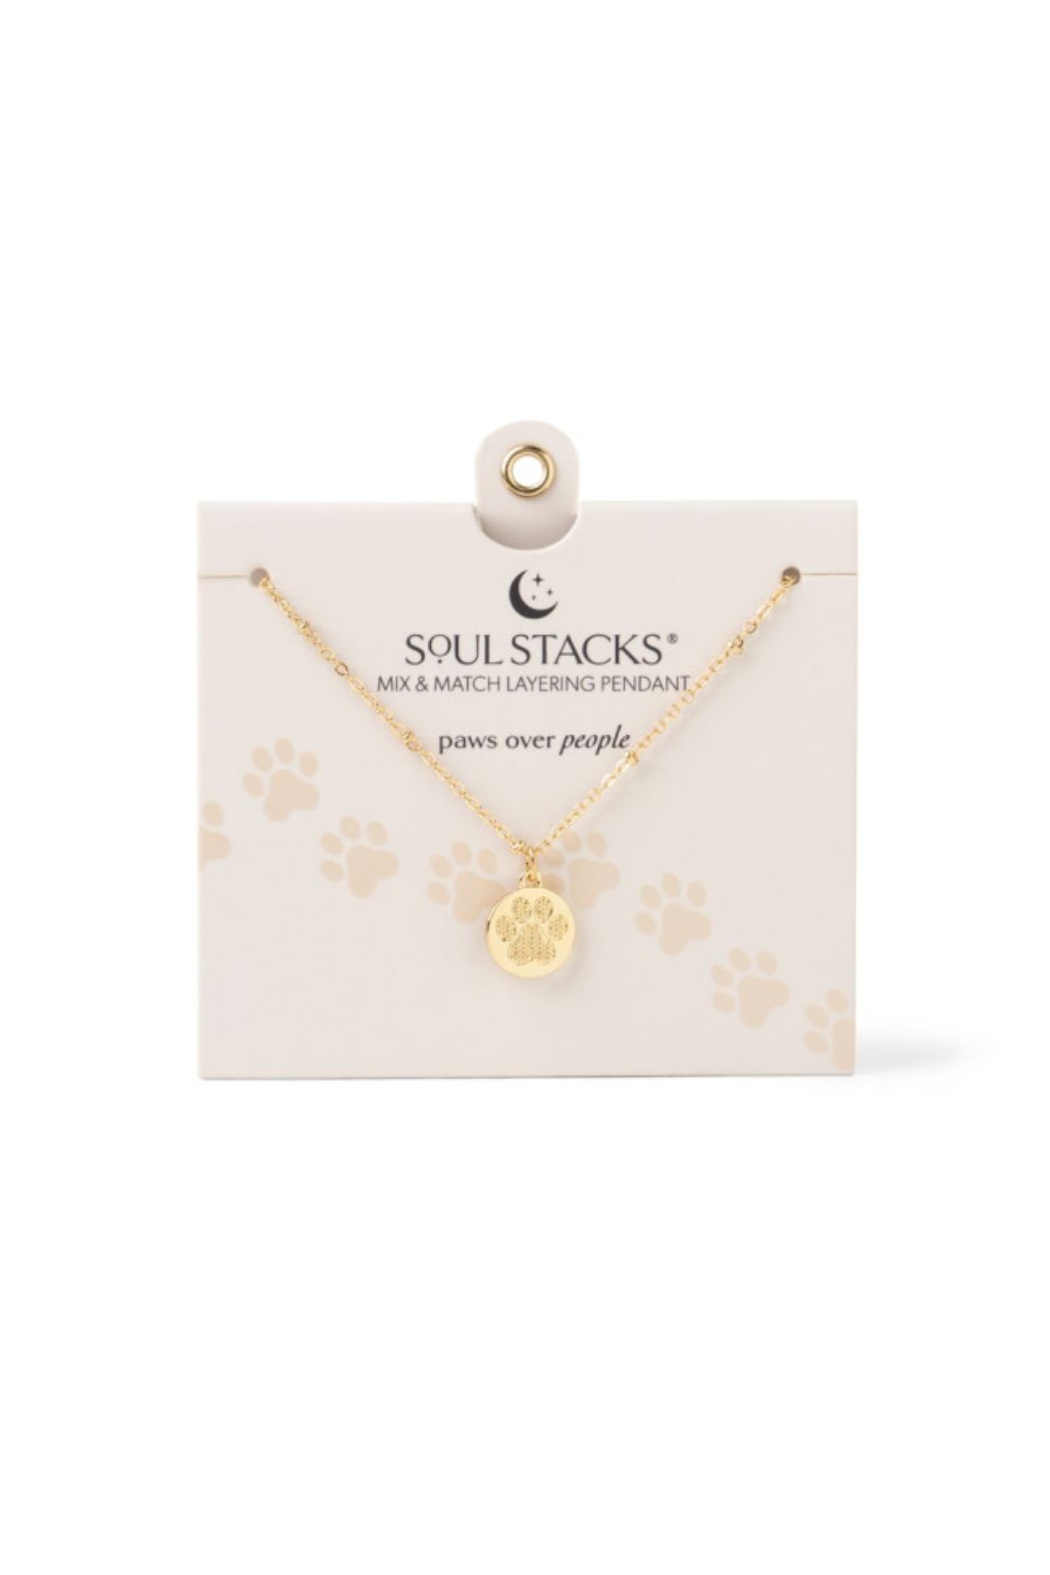 Pet Paw Charm Layering Pendant Necklace | Soul Stacks